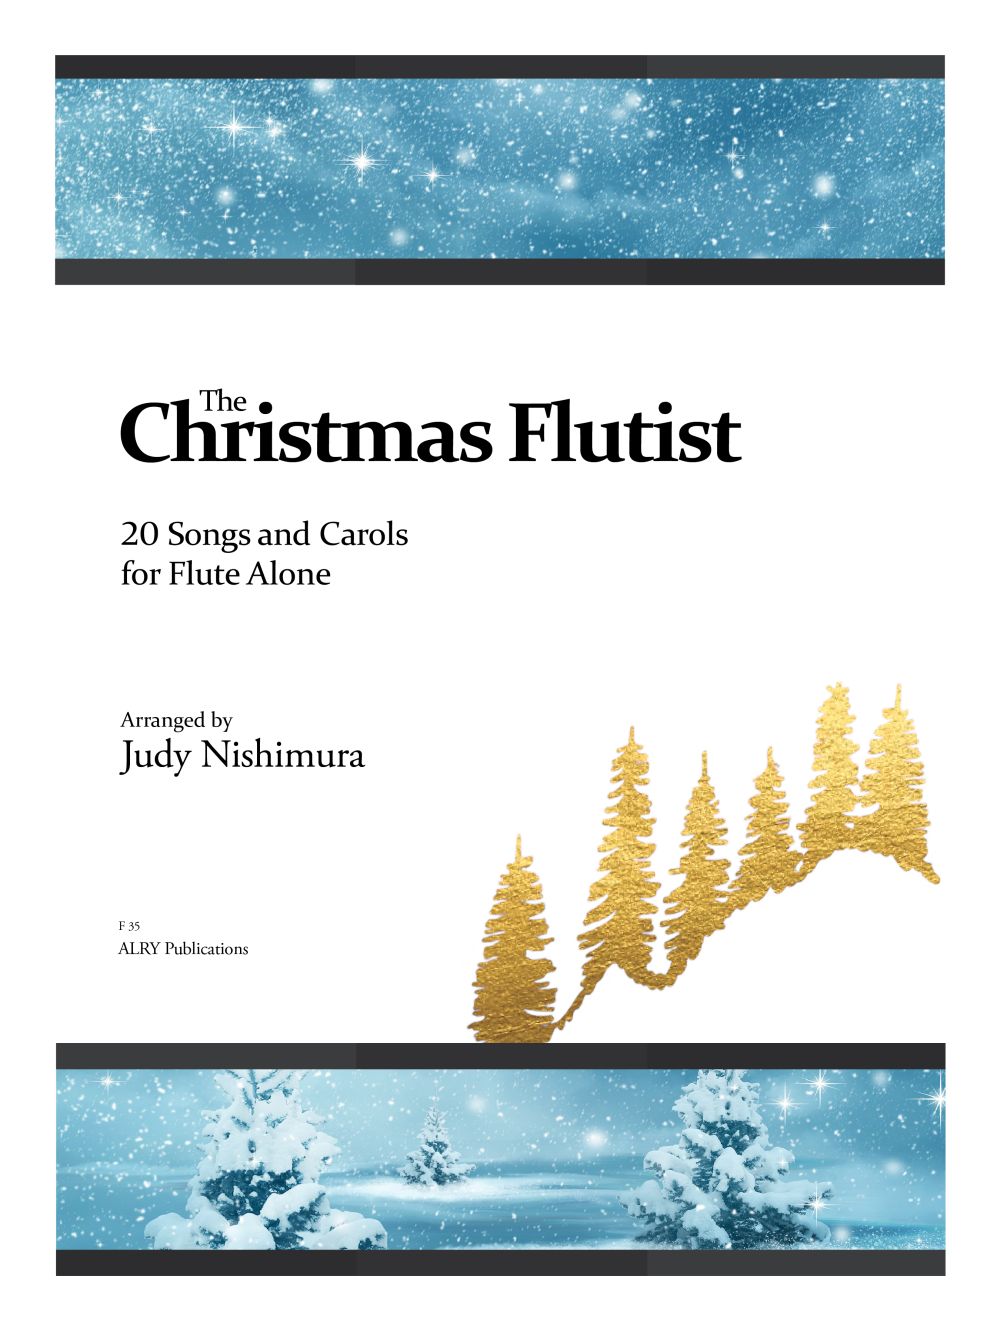 The Christmas Flutist: 20 Songs And Carols (NISHIMURA JUDY)